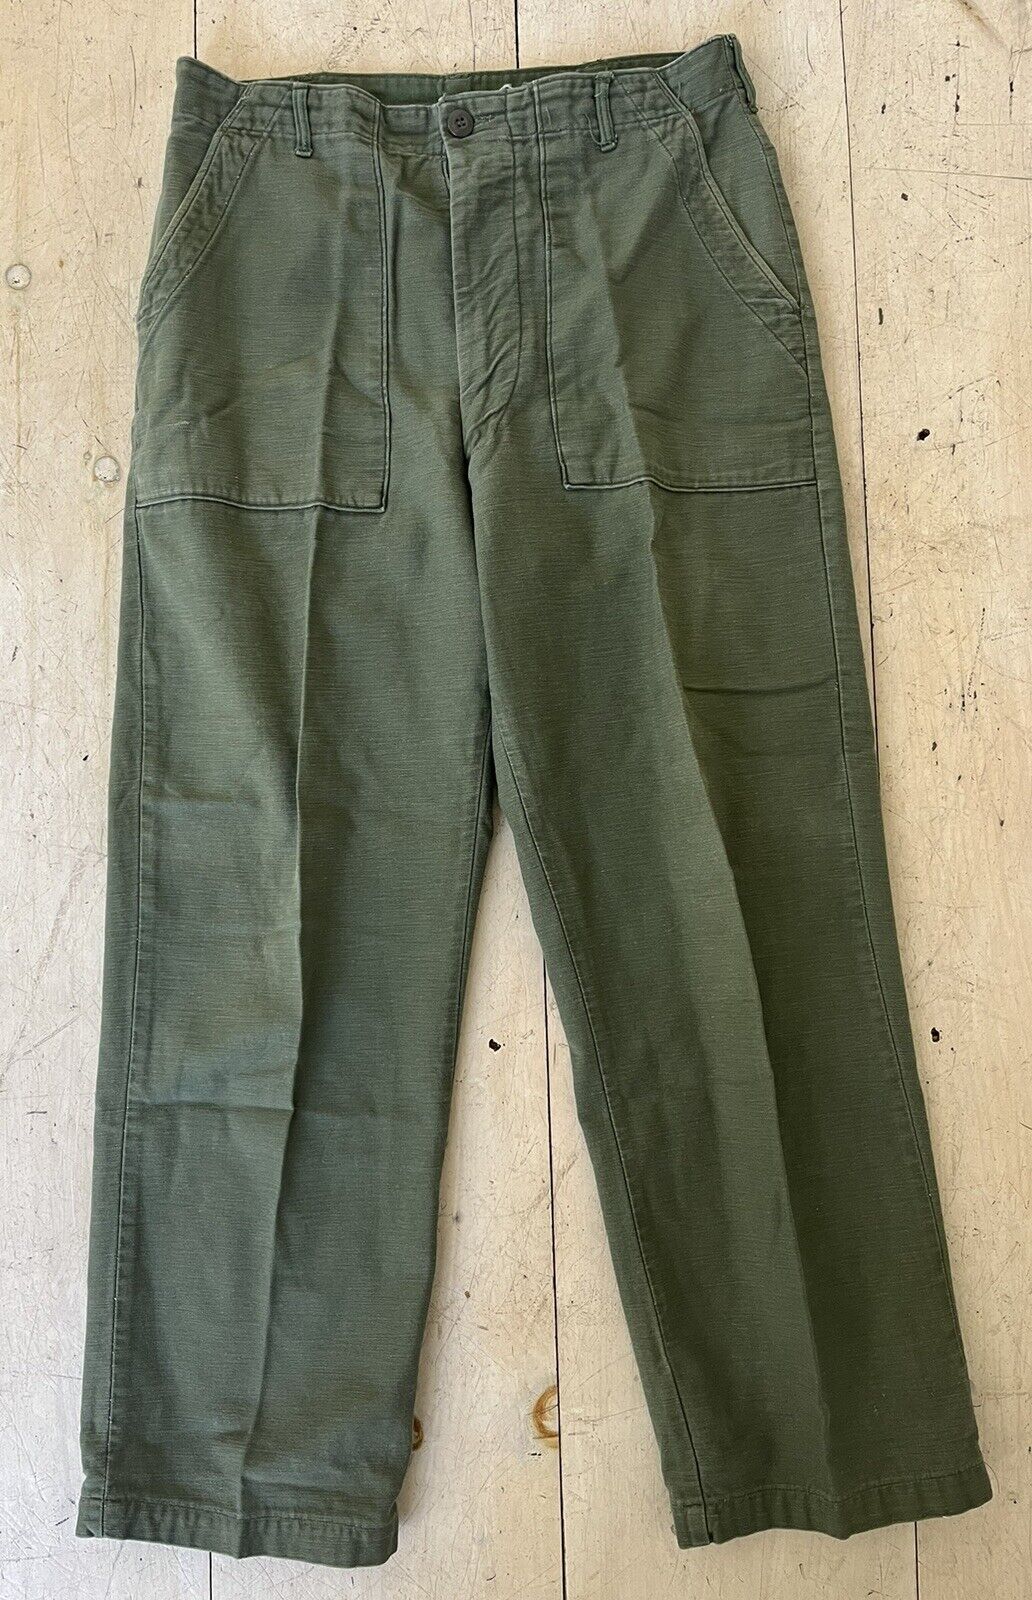 VTG Vietnam Era US Army Cotton Sateen Trouser Pants OG 107 Size 34 x 29 1969 C